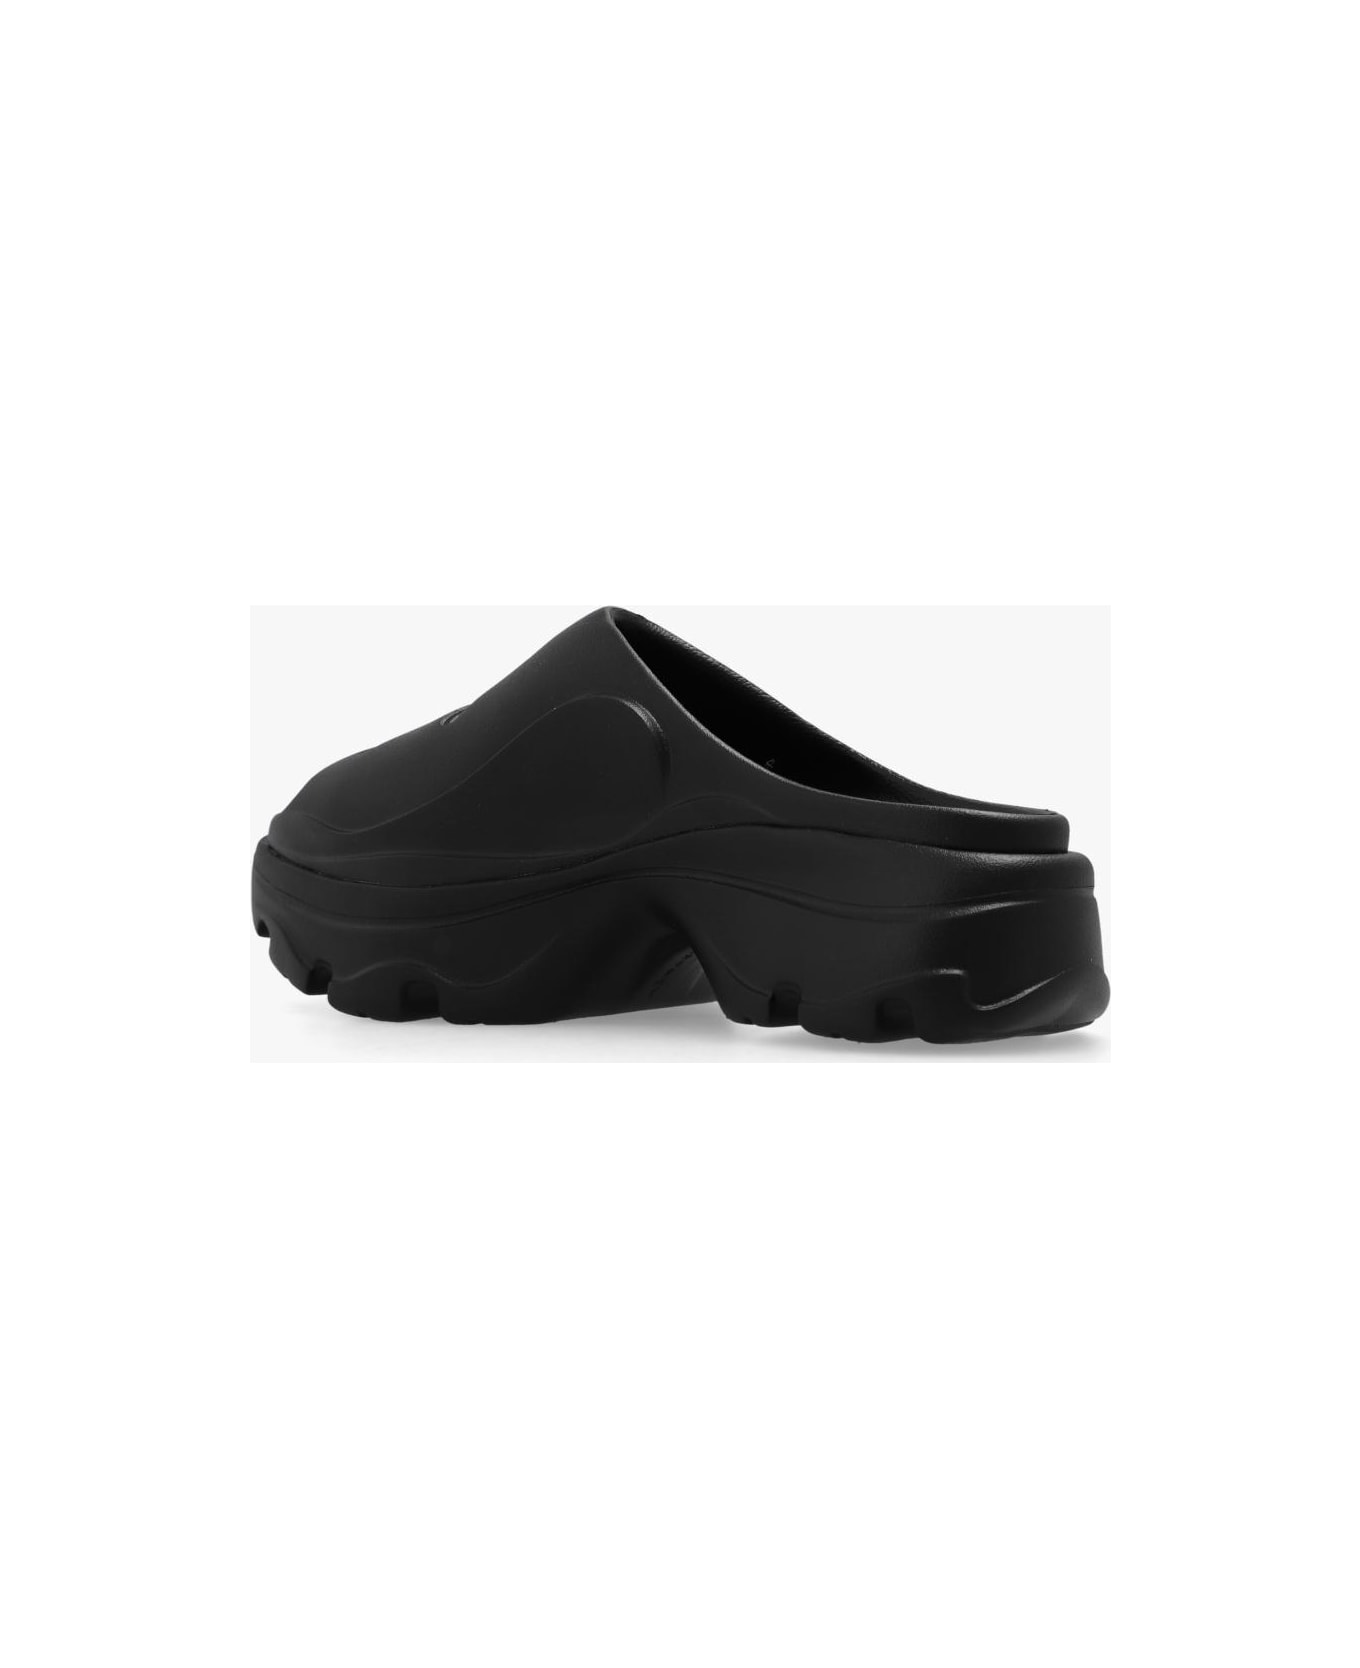 Adidas by Stella McCartney Platform Slides - Core Black/core Black/core Black